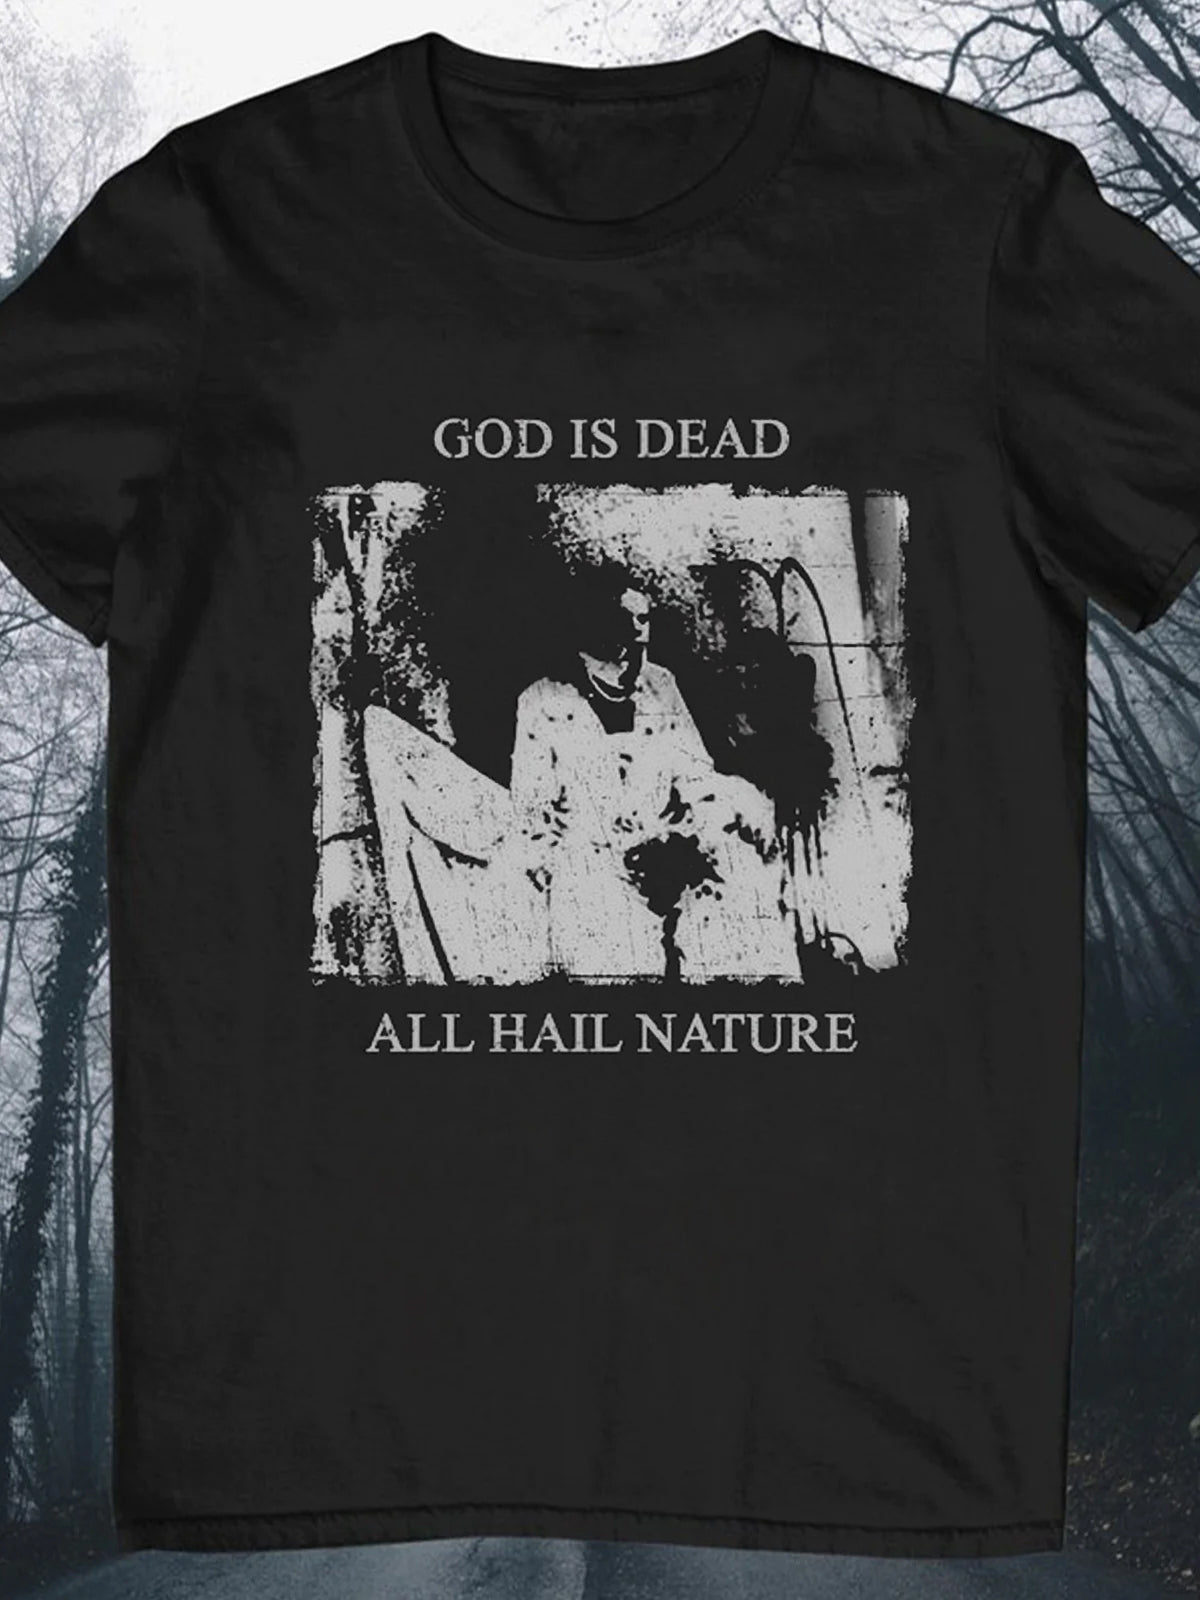 God is Dead Distressed Black Metal Crew Neck Short Sleeve Men's T-Shirt